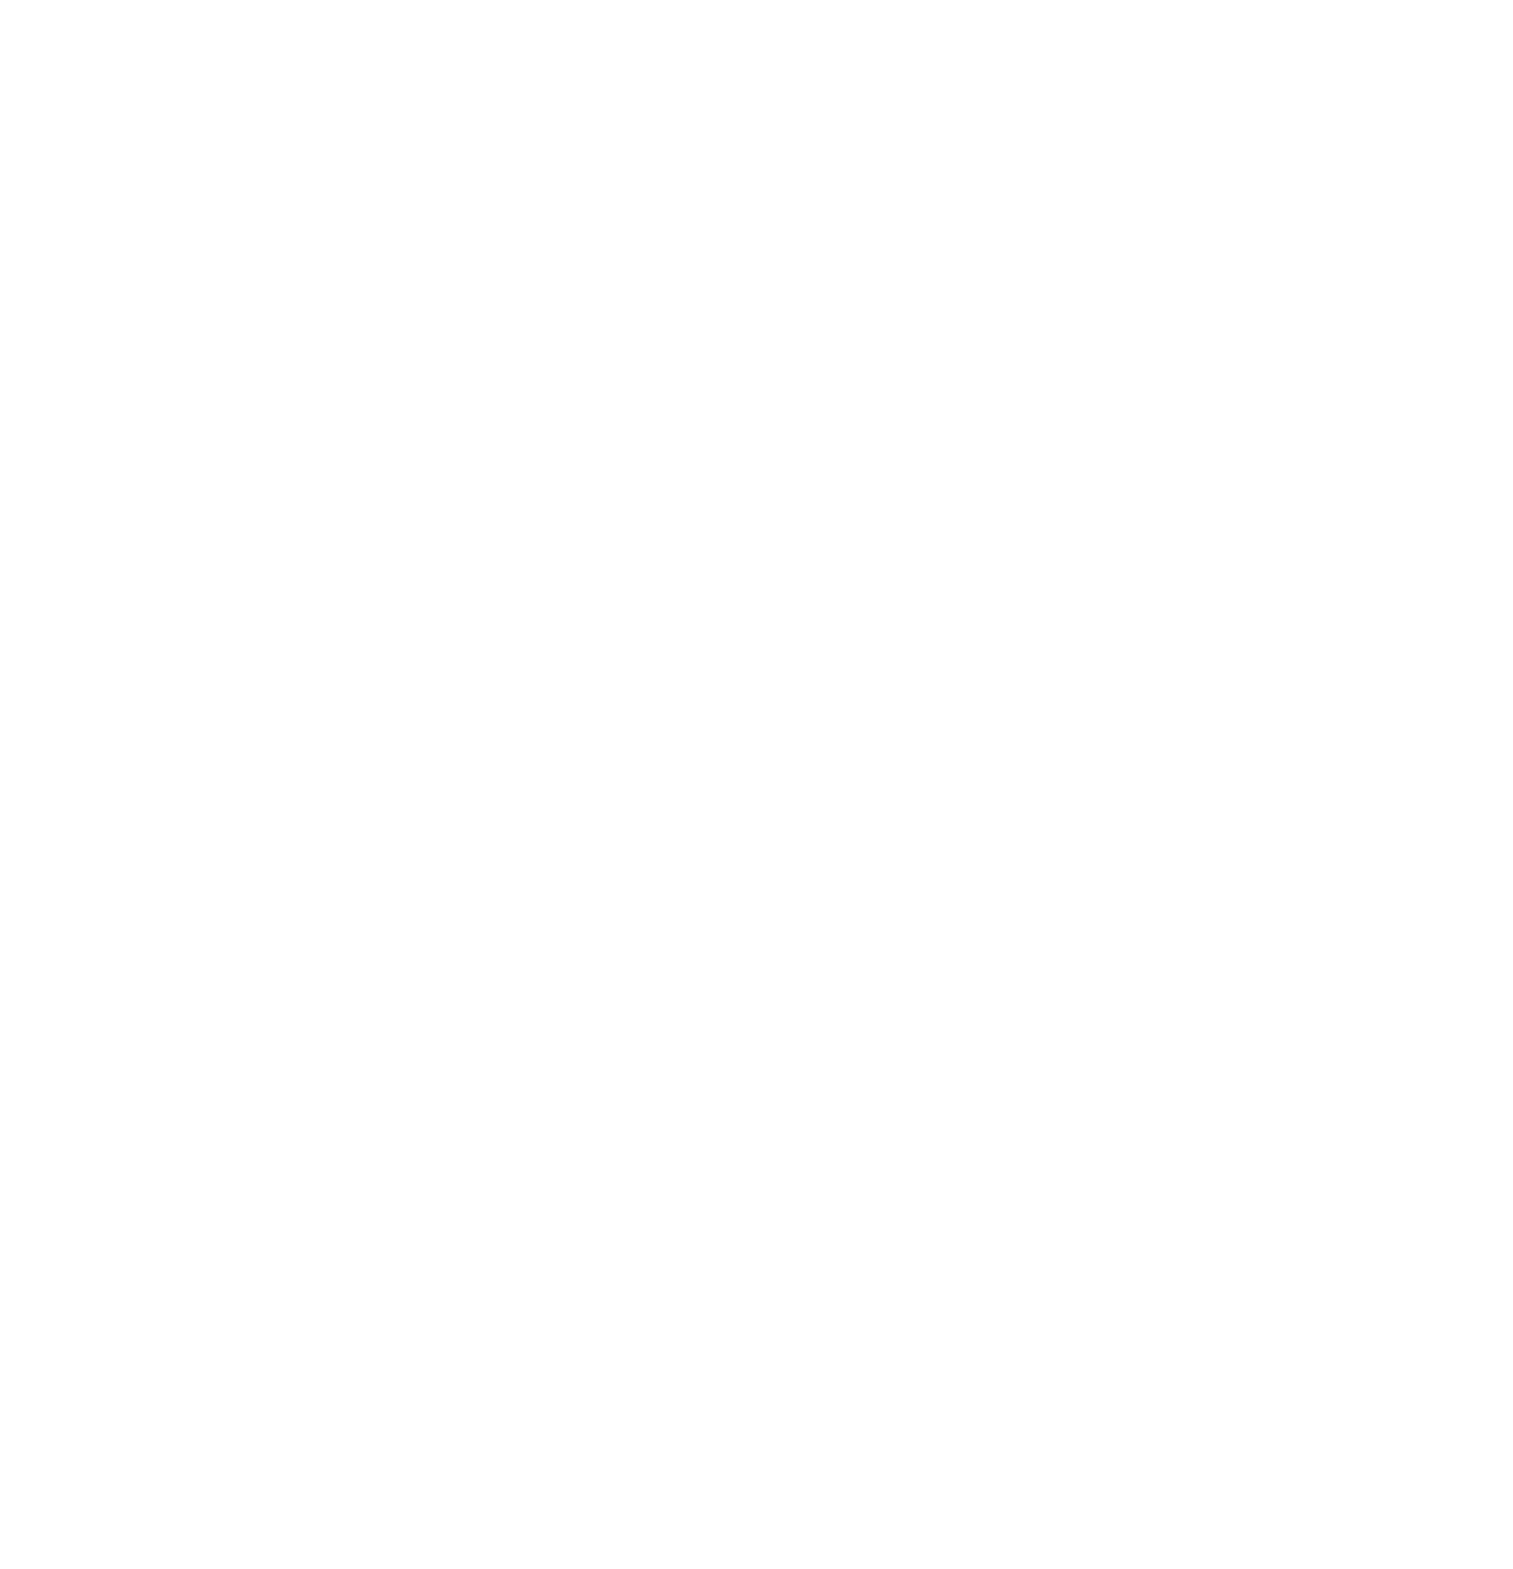 Xunlei logo for dark backgrounds (transparent PNG)